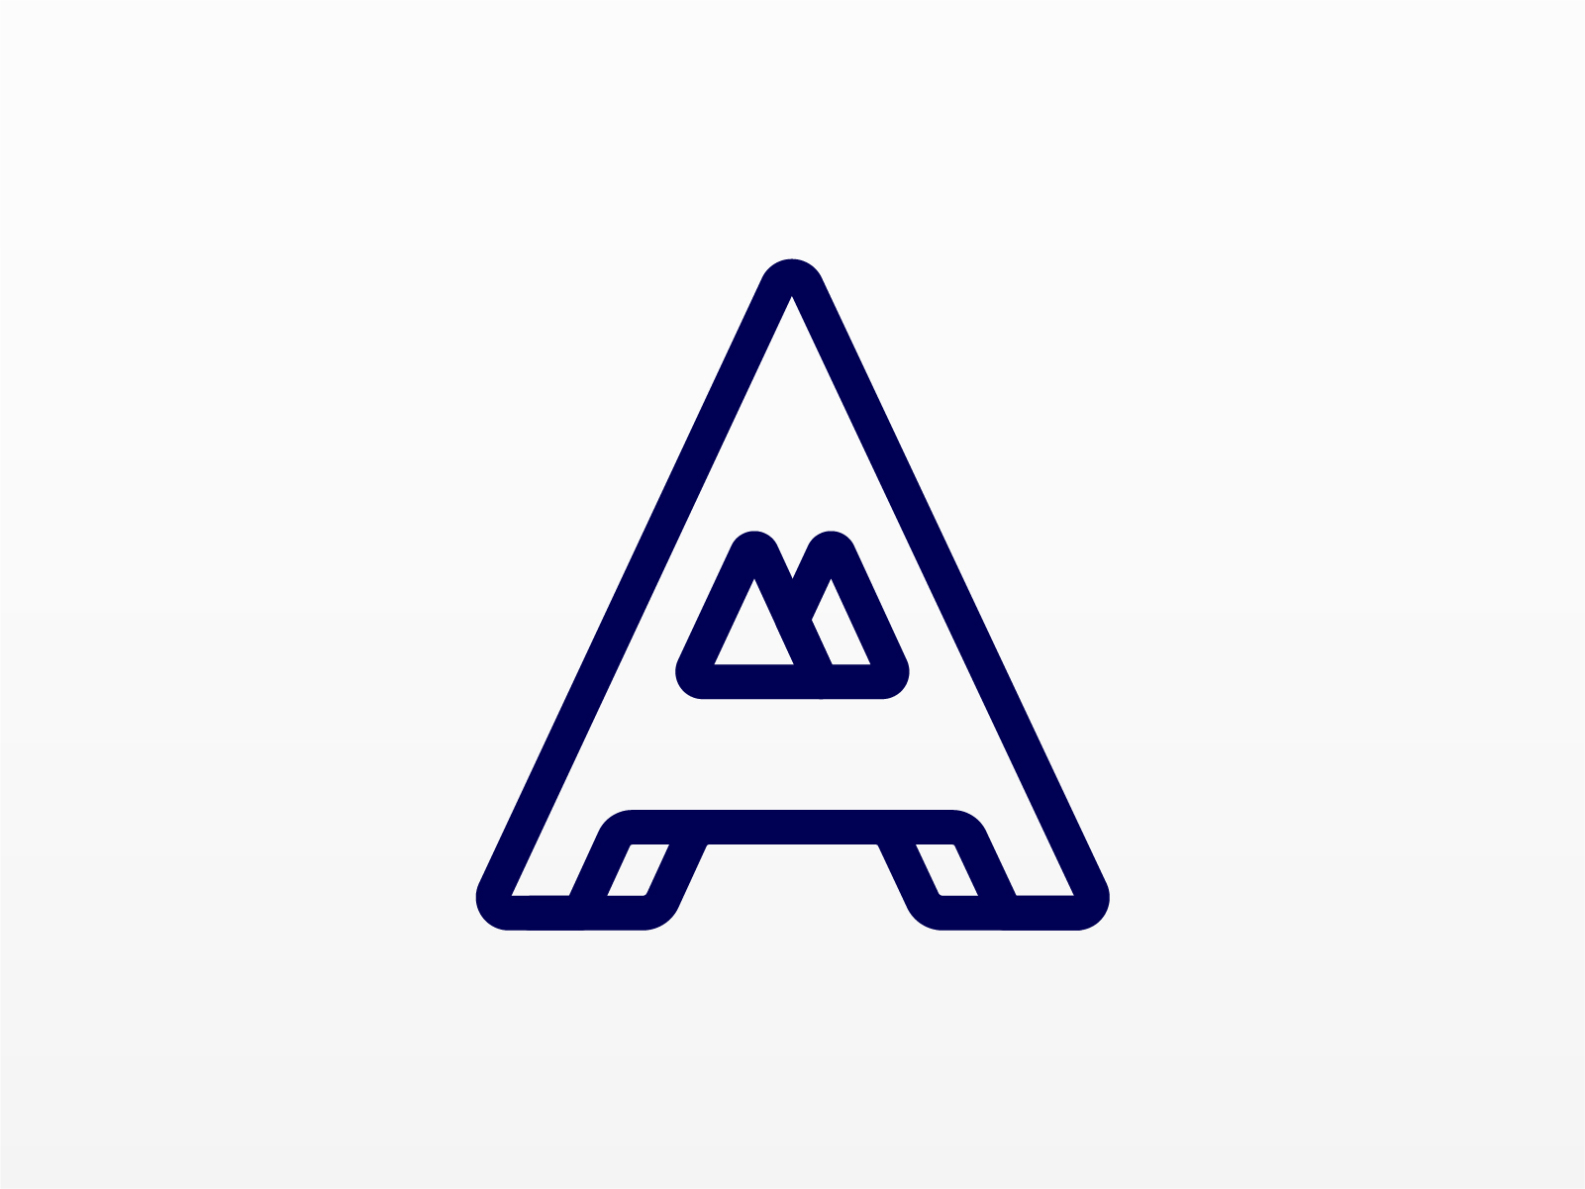 a-lettermark-logo-by-designbydi-on-dribbble